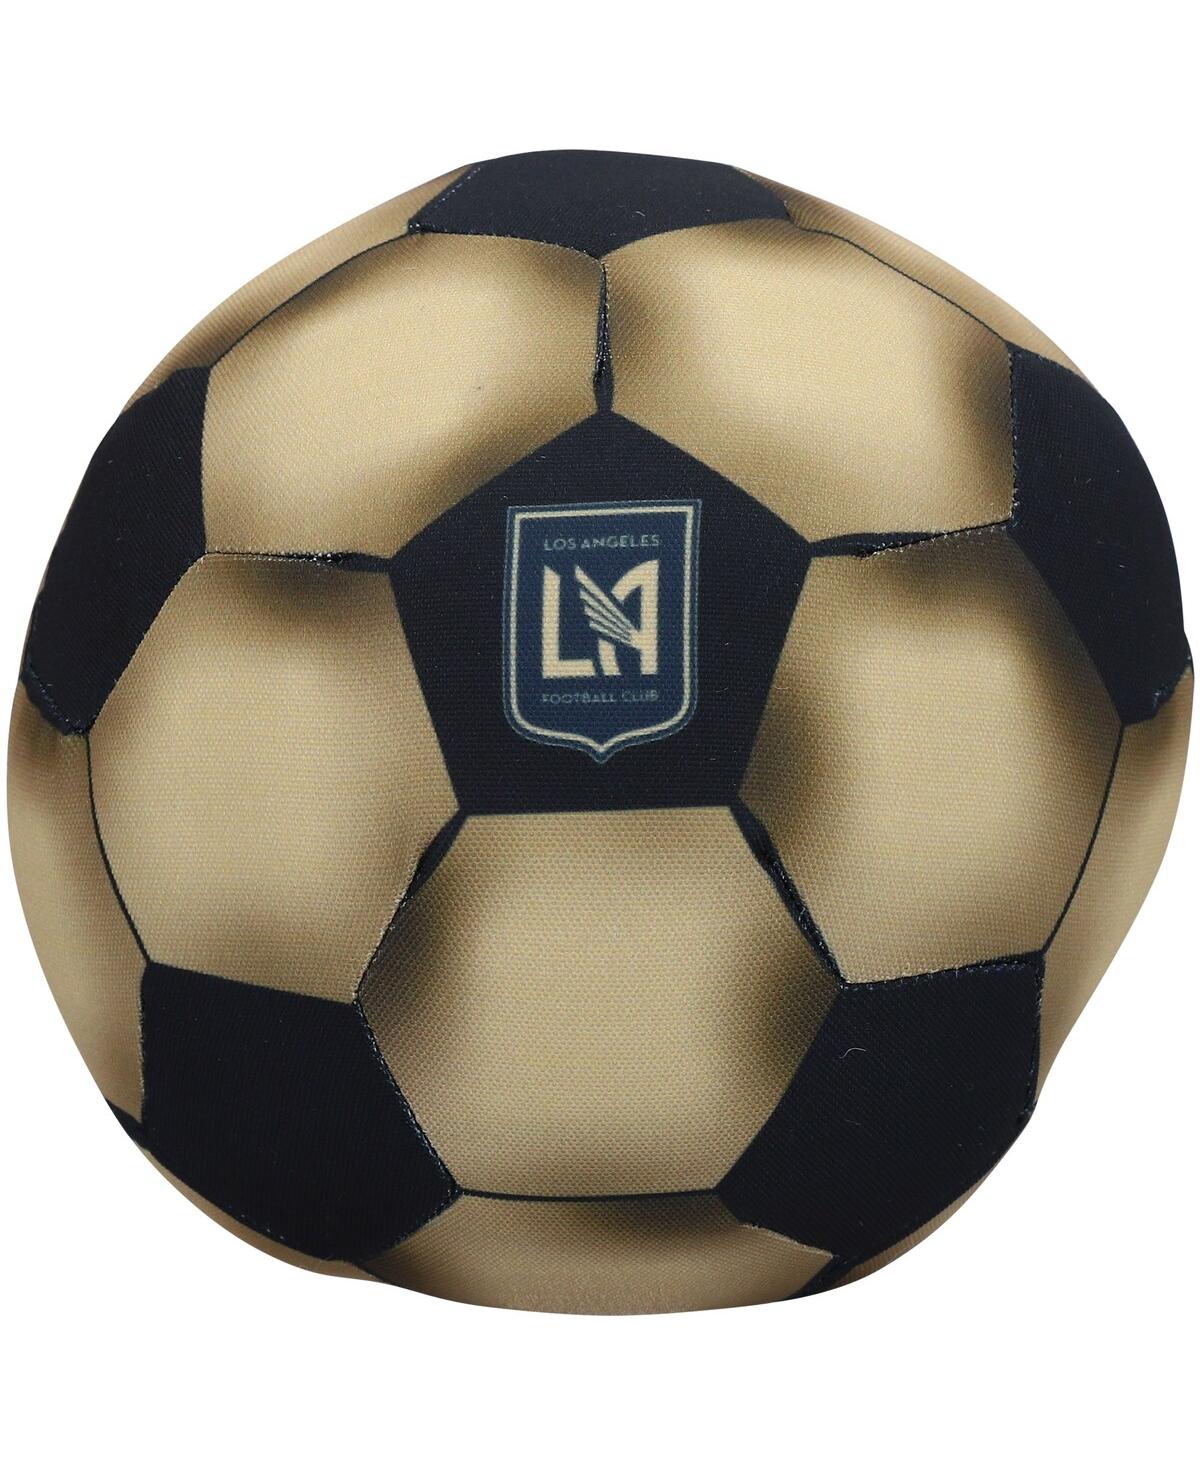 Lafc Soccer Ball Plush Dog Toy - Gold